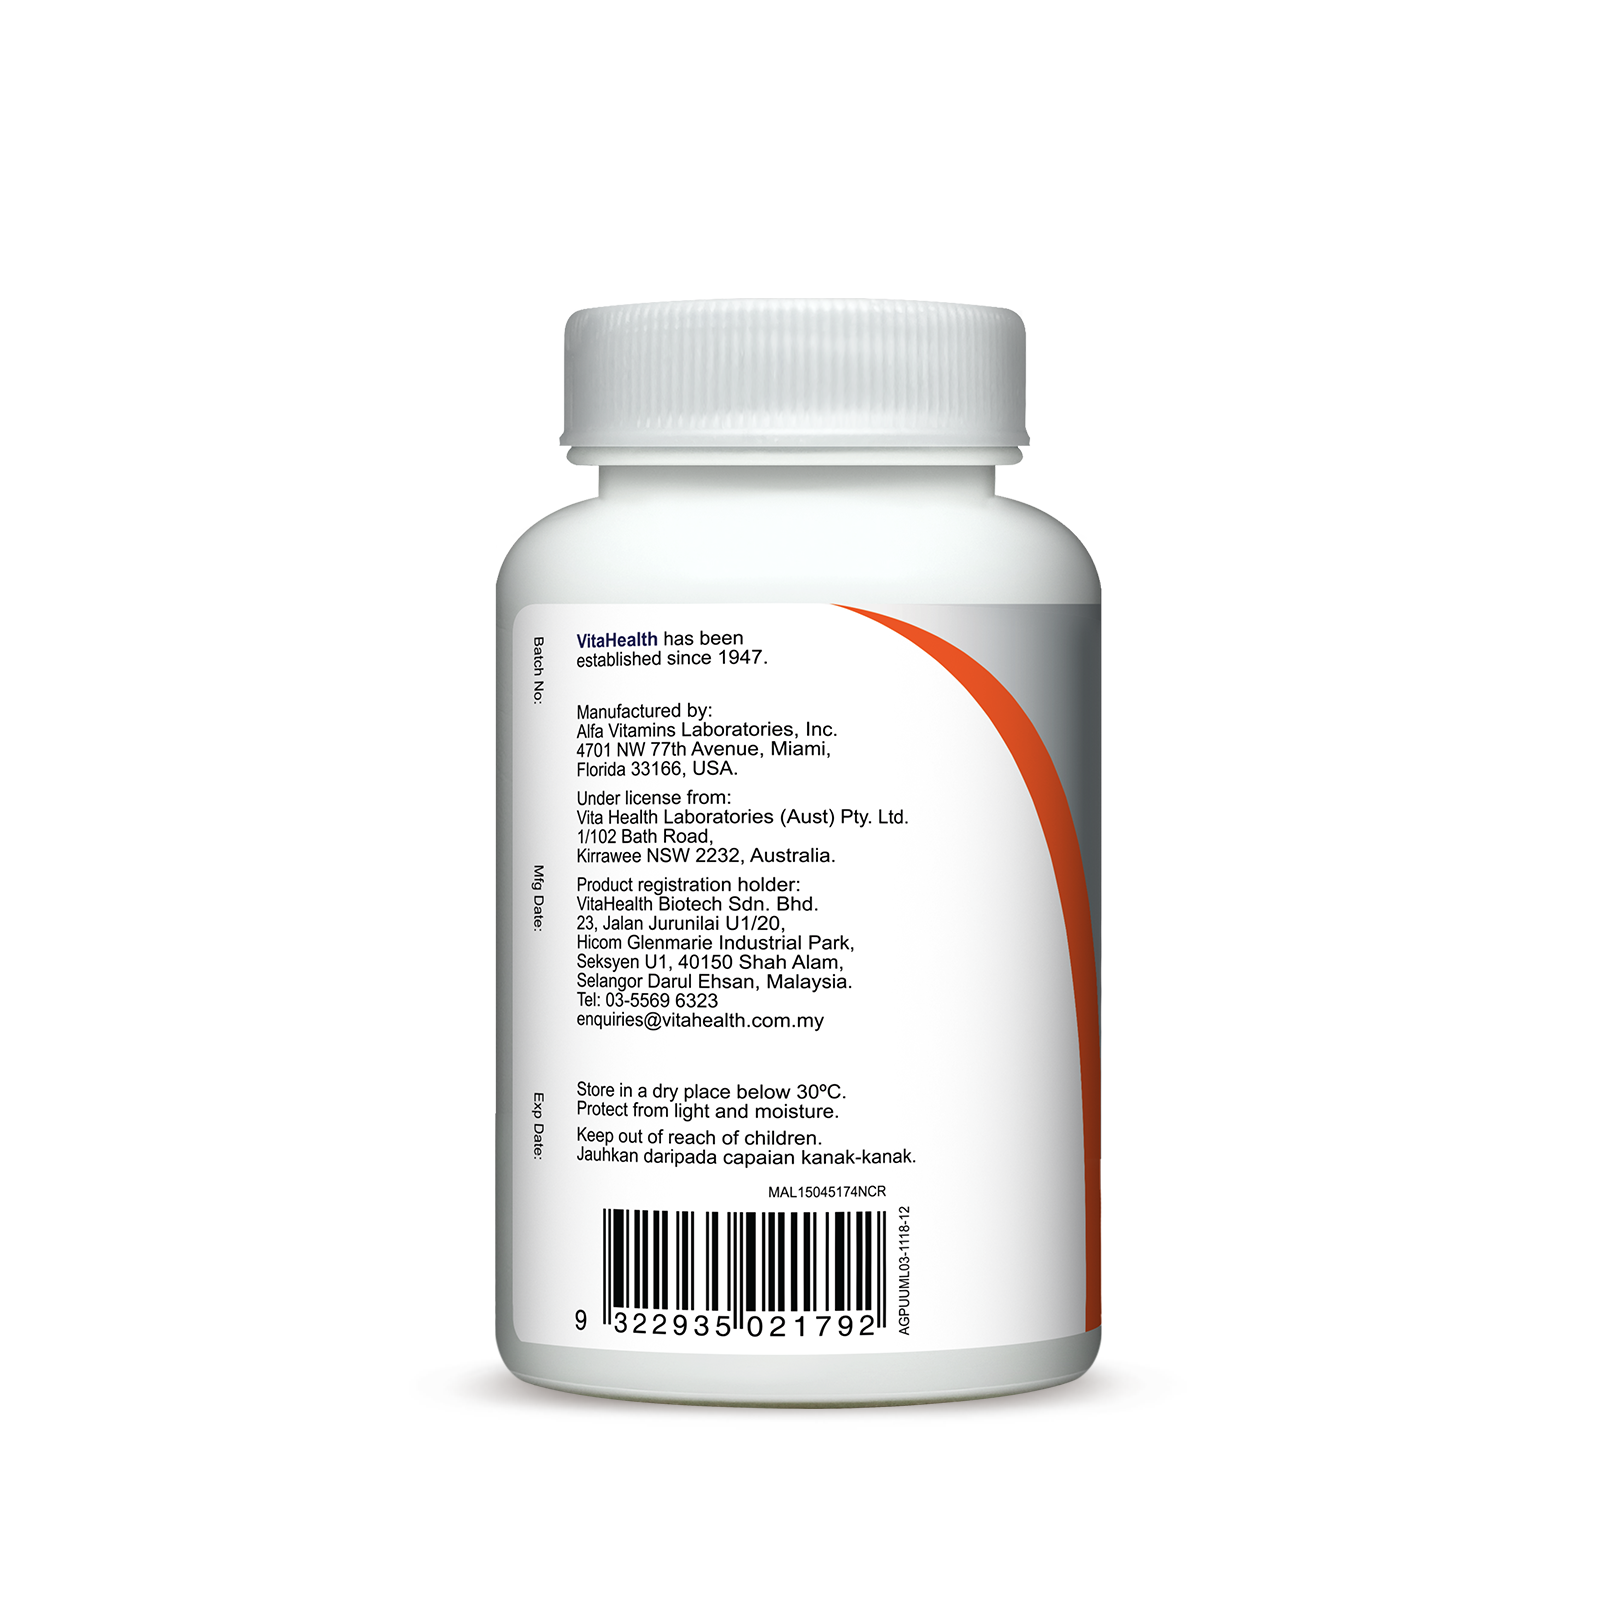 vitahealth-malaysia-asta-glutathione-skin-whitening-supplements